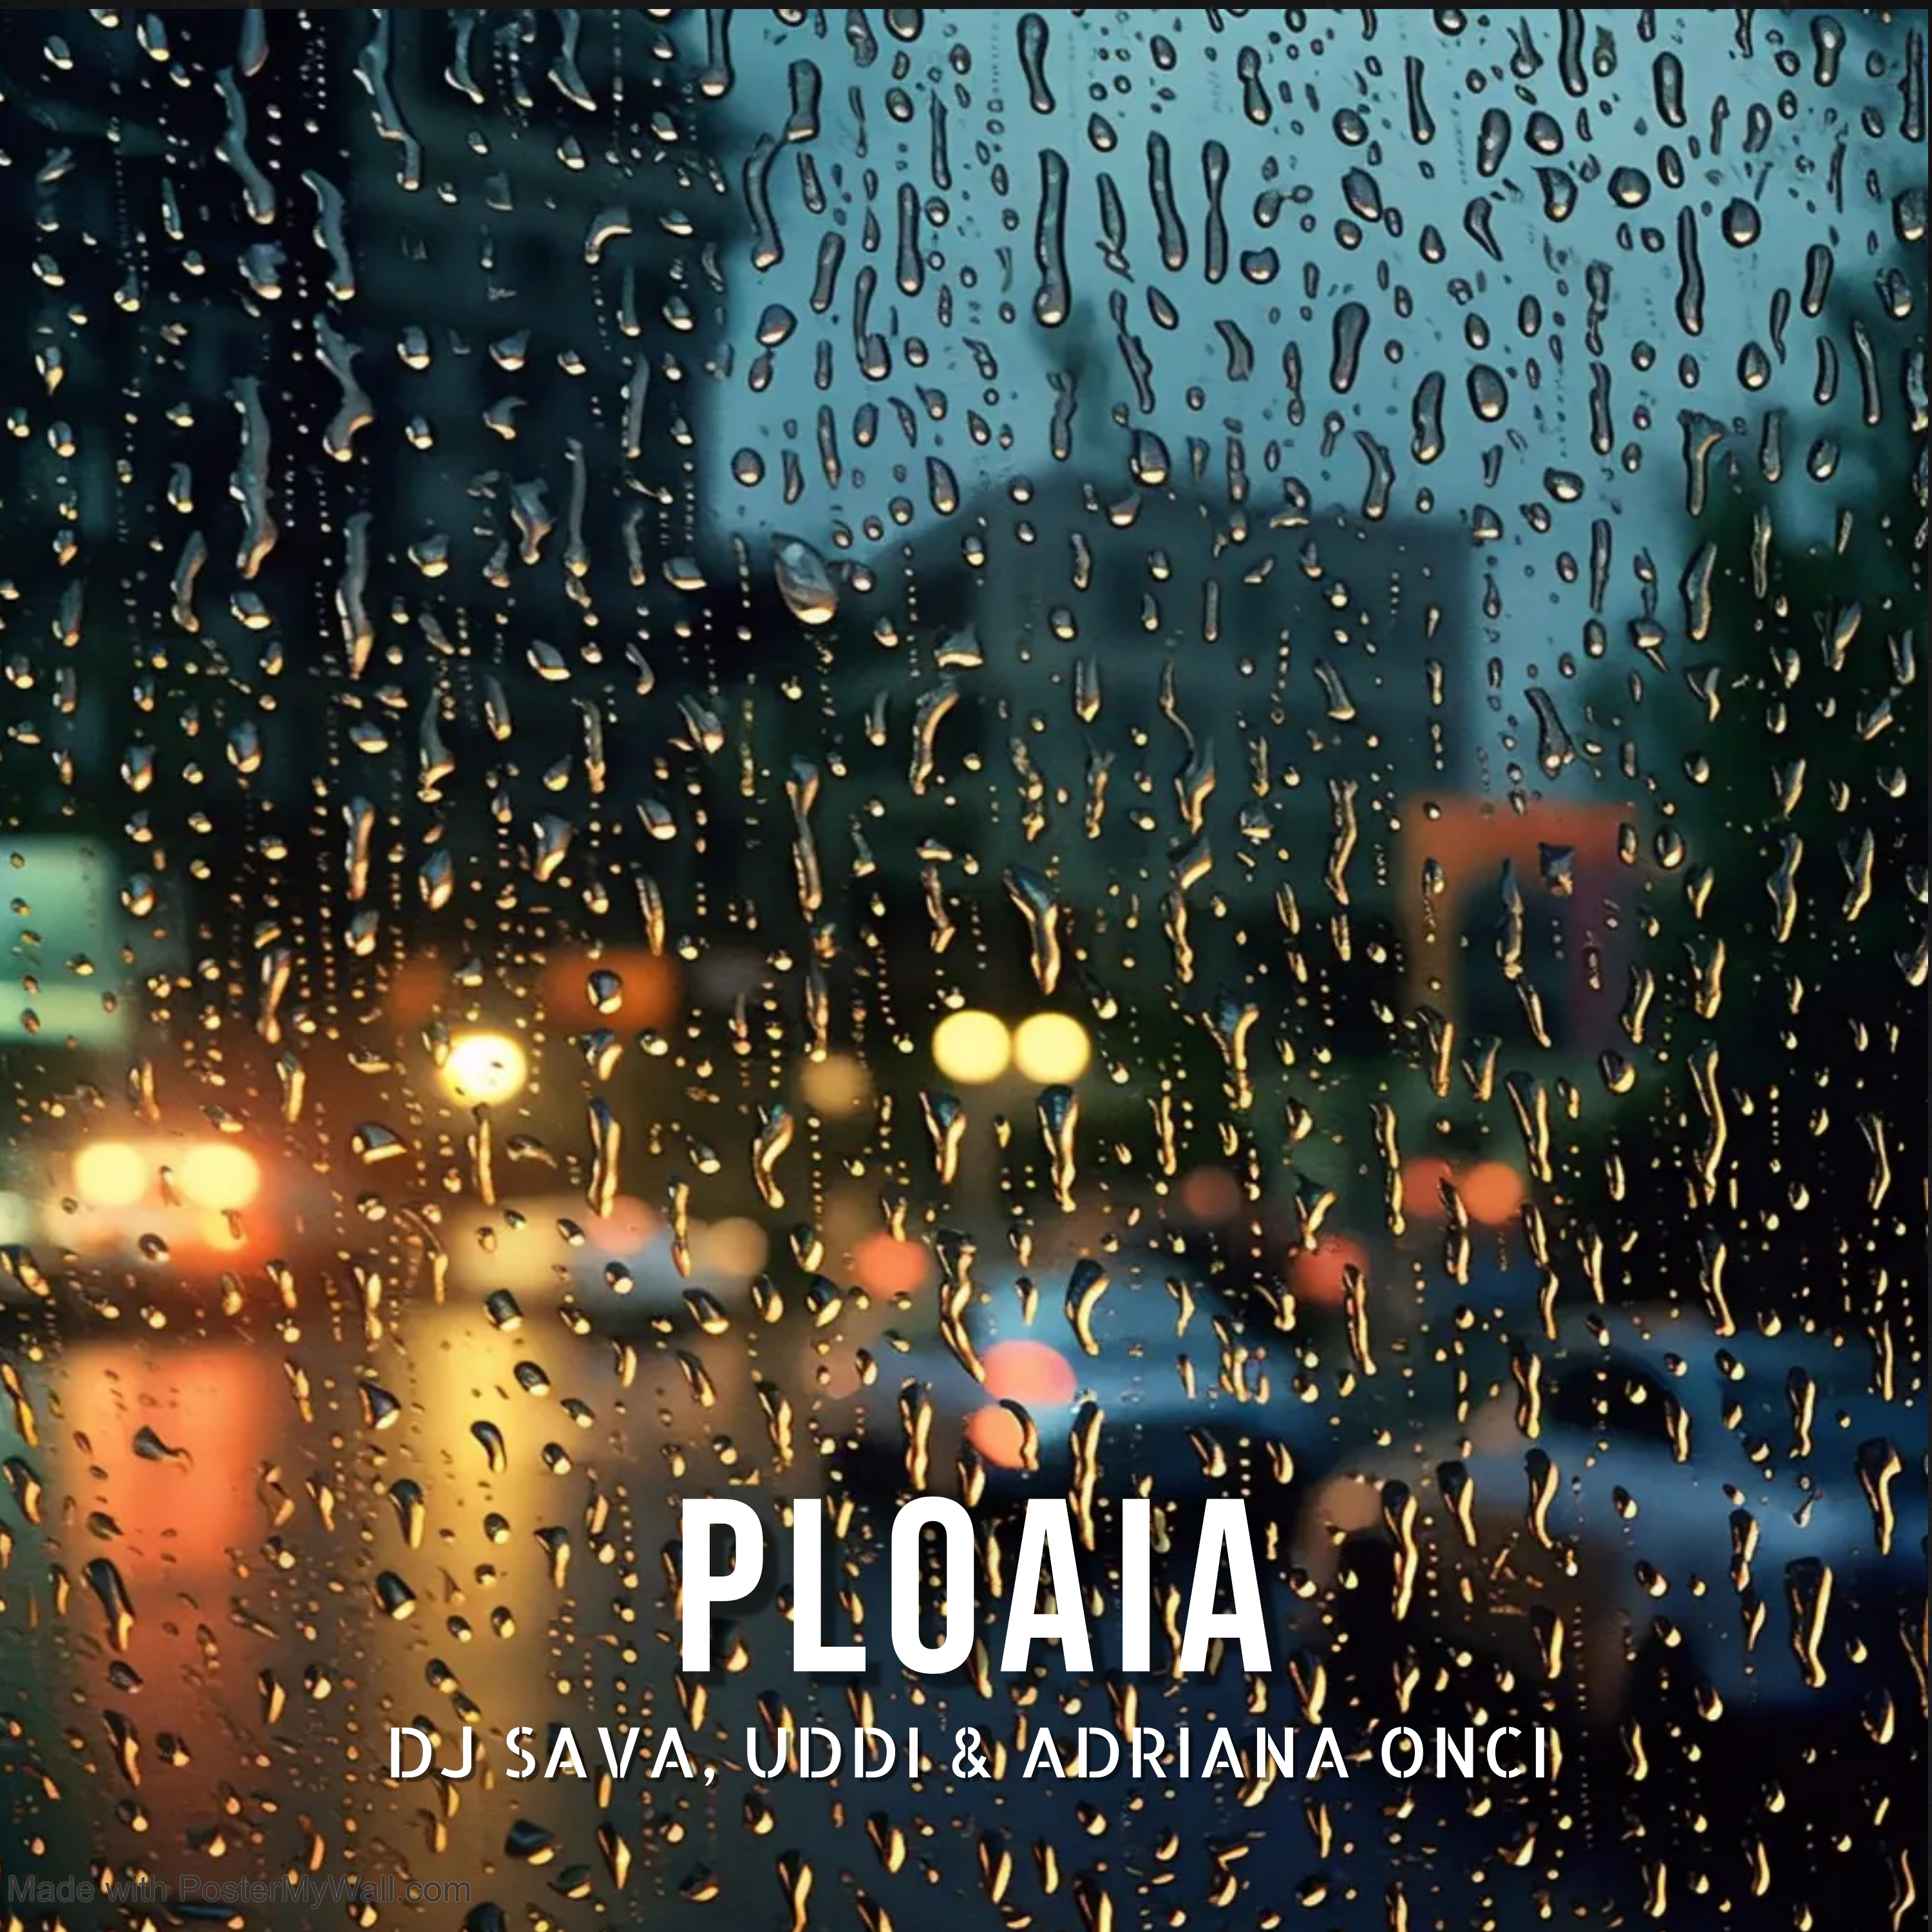 Ploaia. I loved you dj sava feat